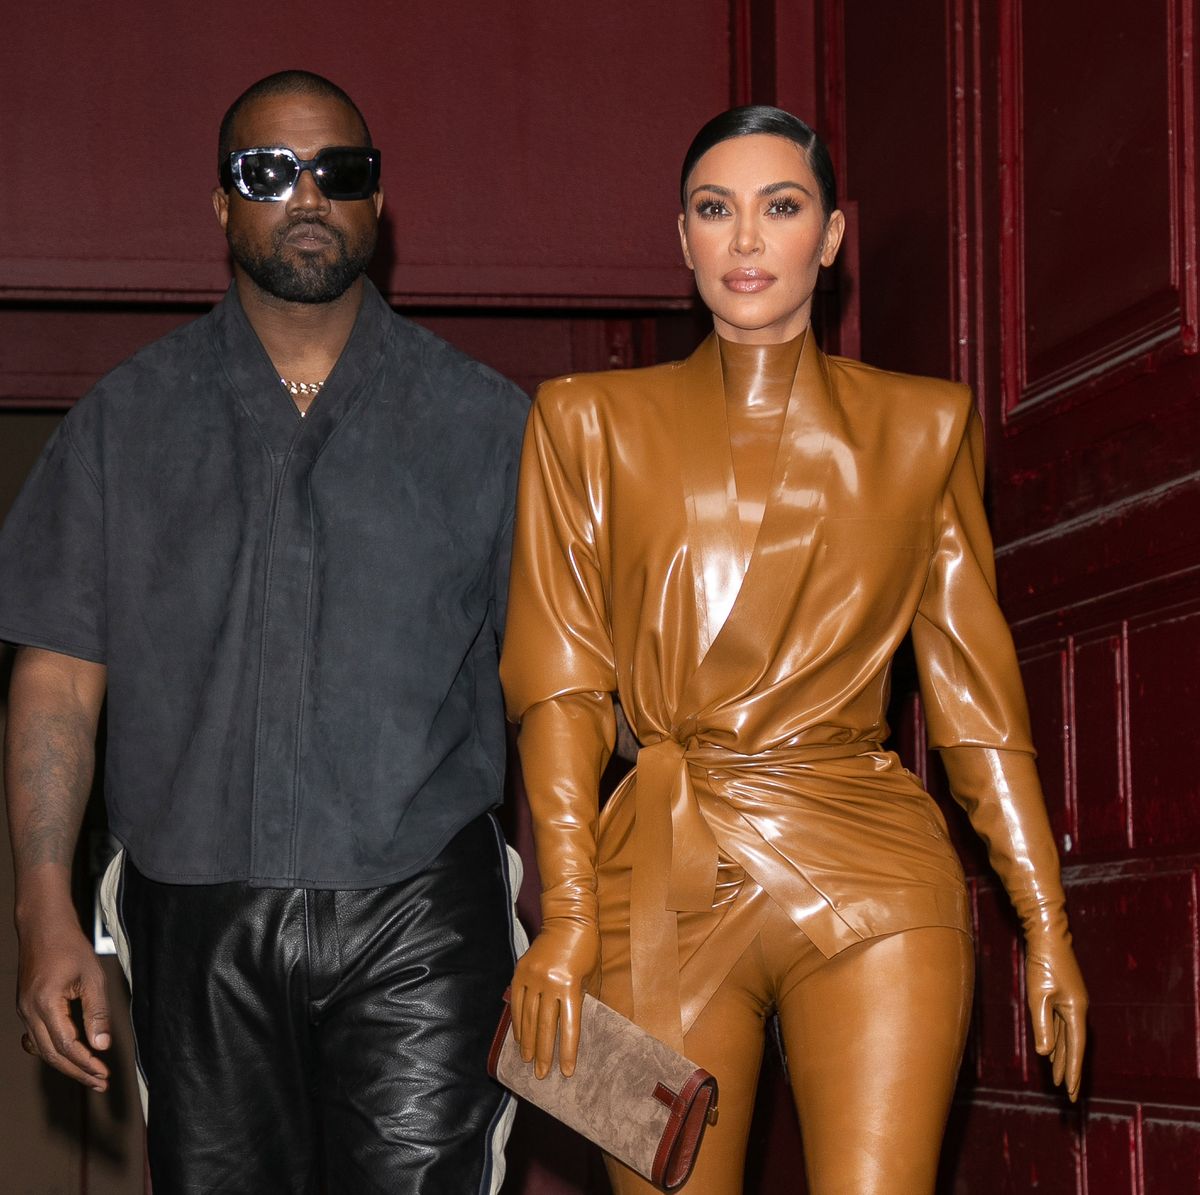 Kanye West slams Kim Kardashian over pins on daughter's backpack